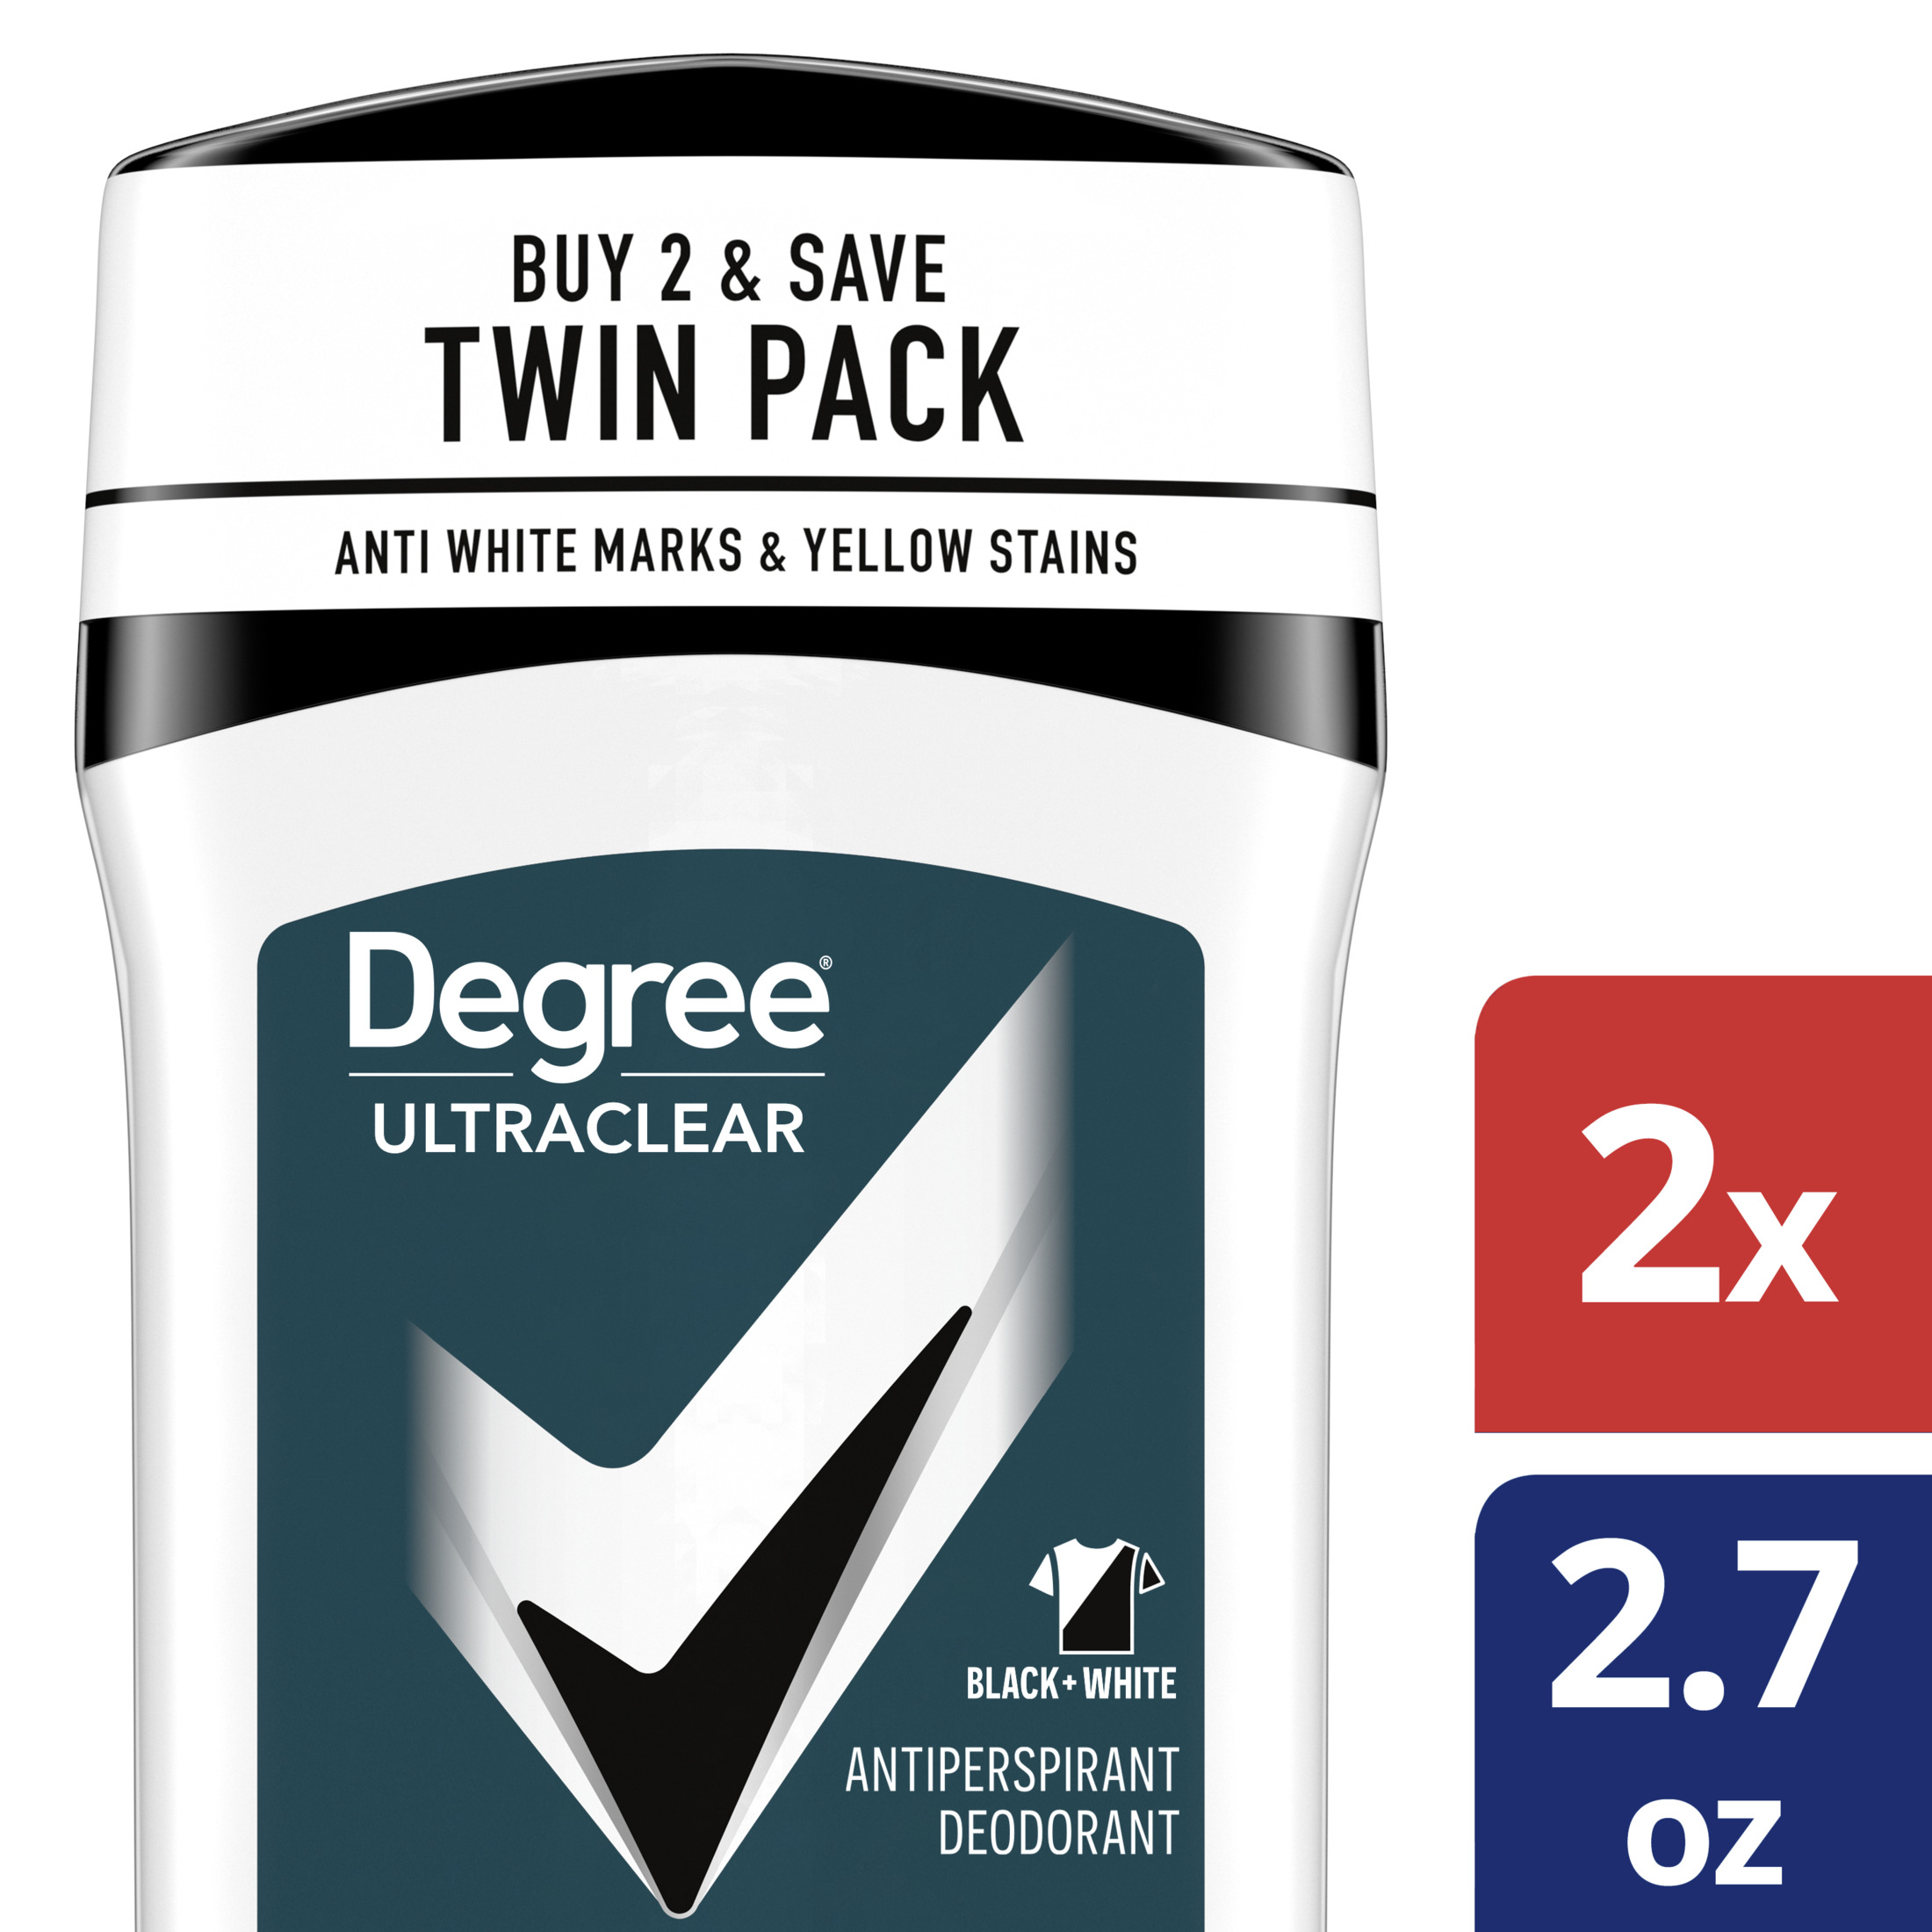 Degree Ultra Clear Anti White Marks Men's Antiperspirant Deodorant Stick Black + White, 2.7 oz Twin Pack - image 3 of 10